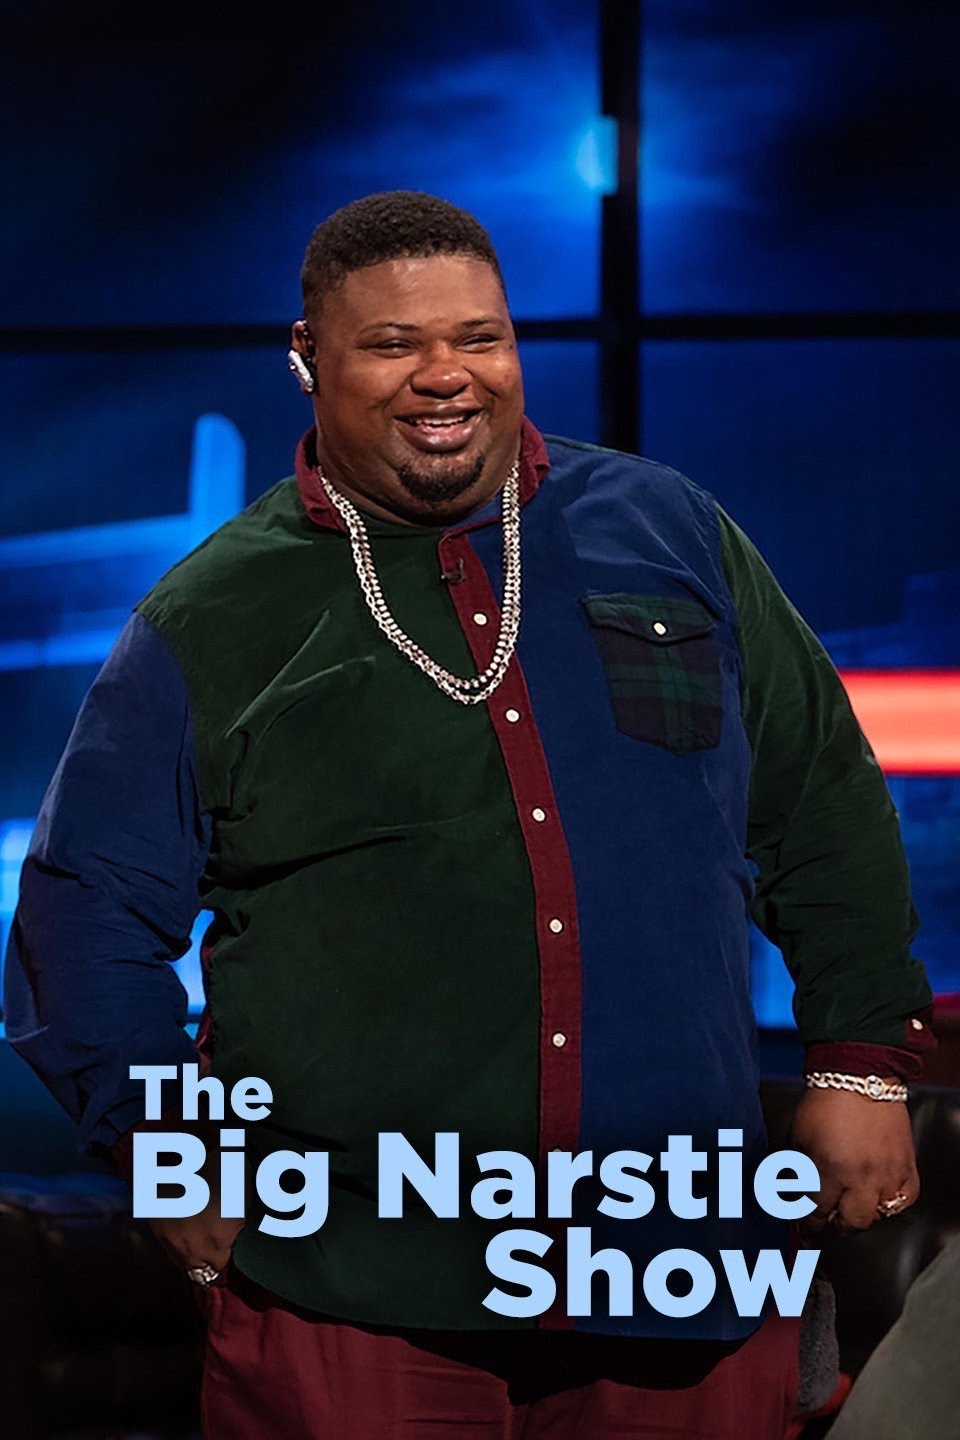 The Big Narstie Show (2018)